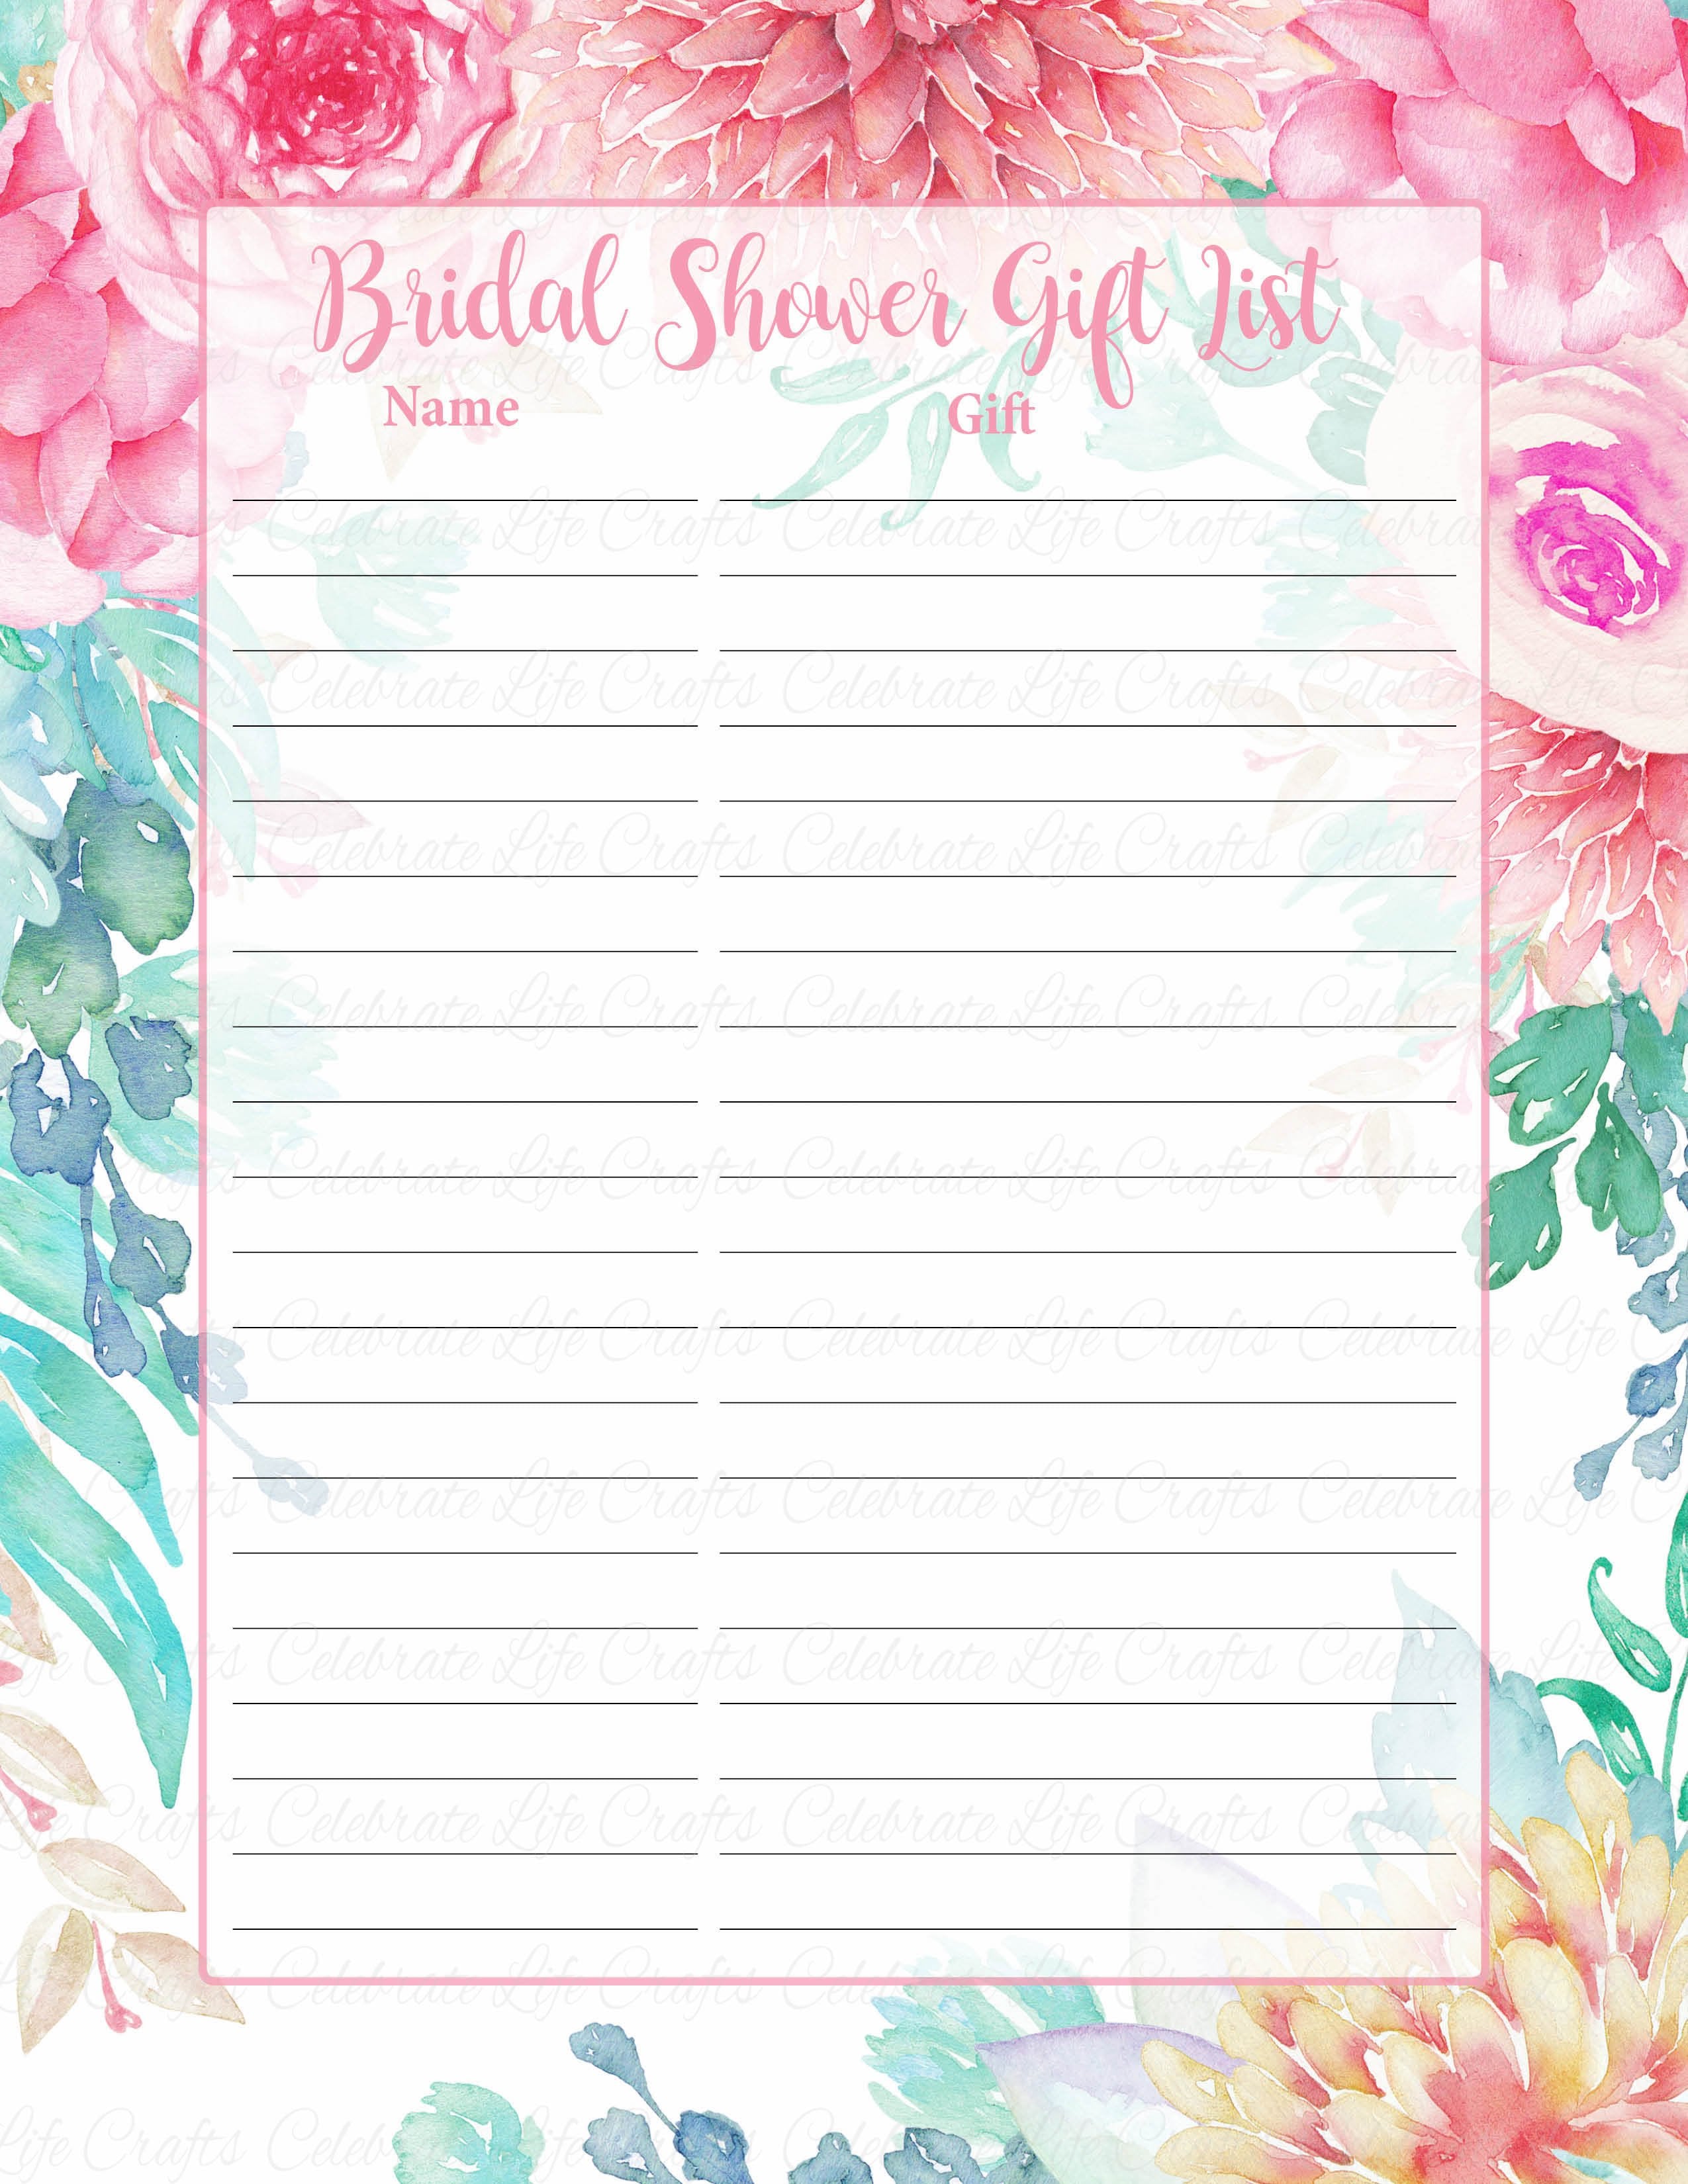 bridal-shower-gift-list-and-sign-set-pink-floral-wedding-shower-theme-celebrate-life-crafts